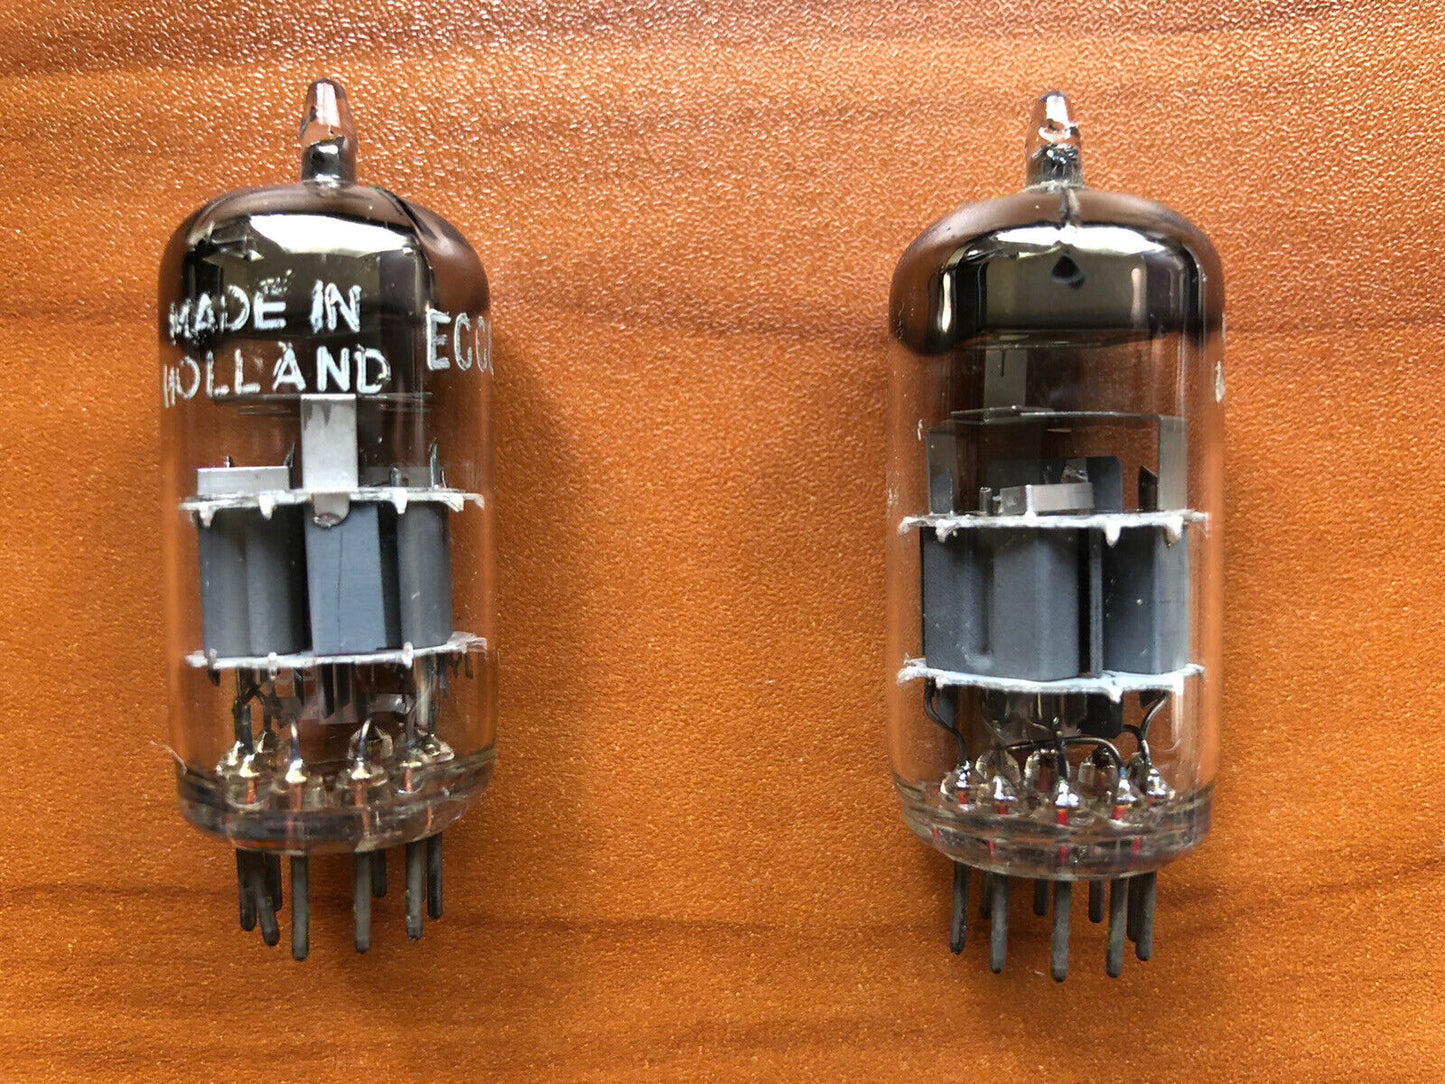 Amperex Bugle Boy 6DJ8 ECC88 D-getter Tubes Matched Pair - 1959 - Same code -NOS